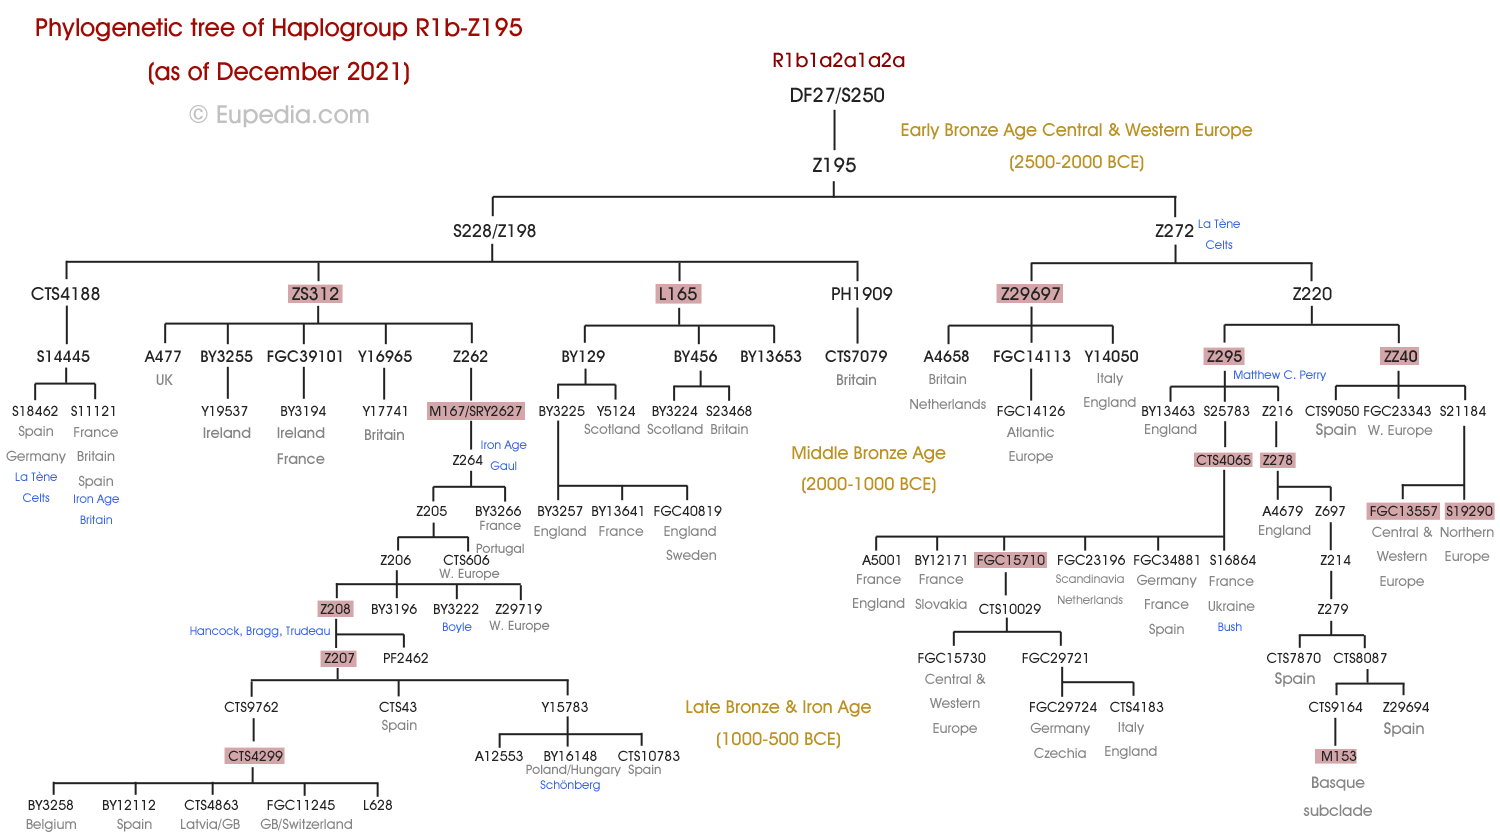 Phylogenetic tree of haplogroup R1b-Z195 (Y-DNA) - Eupedia